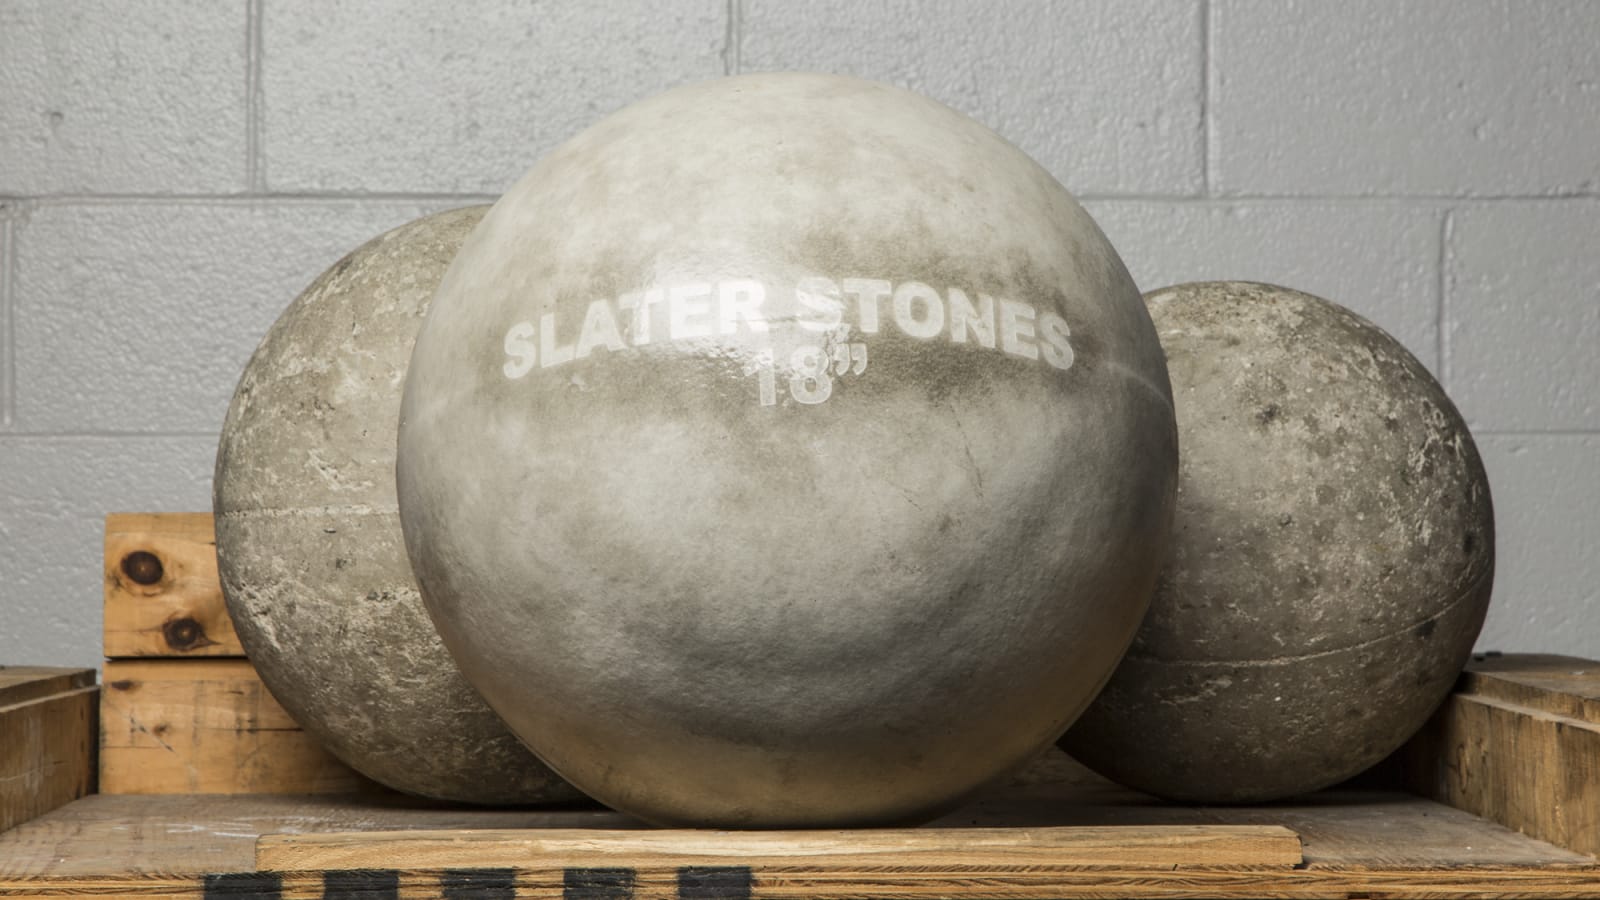 16" Atlas Stone Mold for Crossfit Strength Training Concrete Ball Sphere 